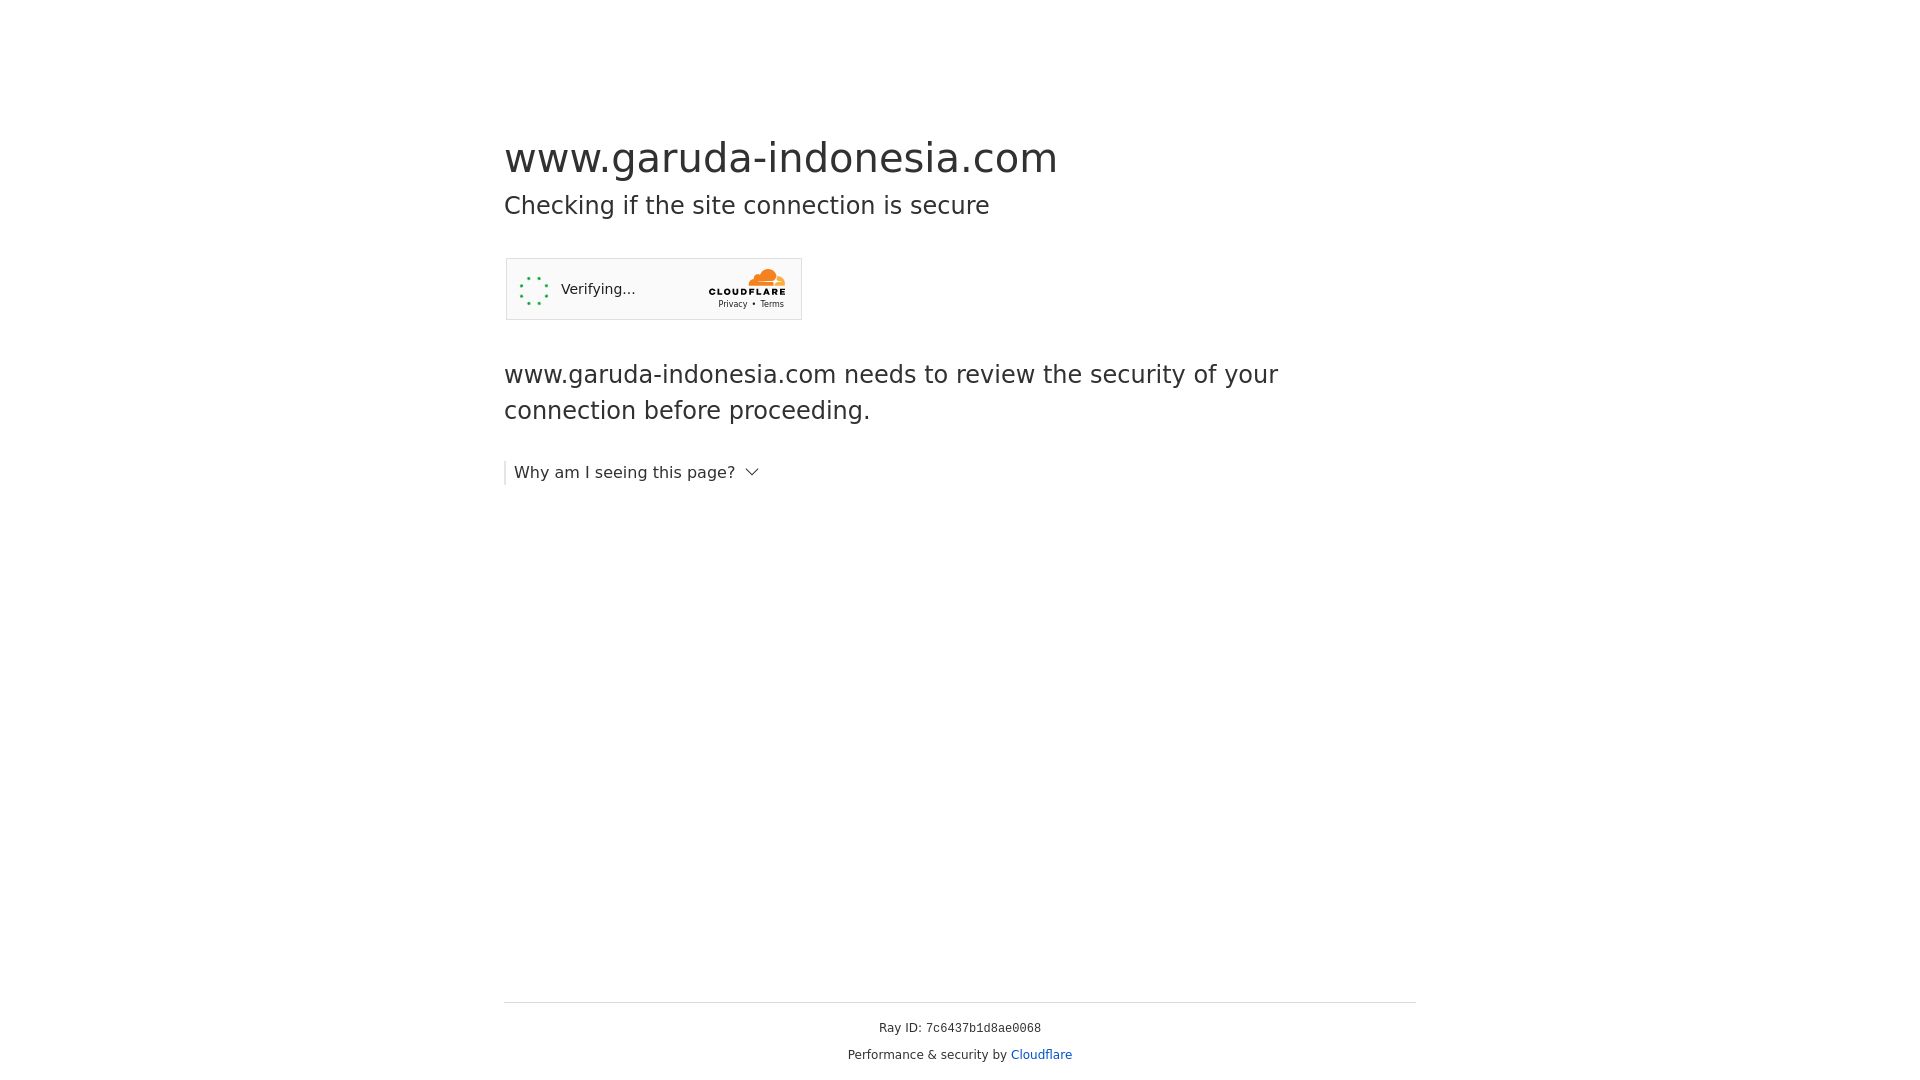 État du site web garuda-indonesia.com est   EN LIGNE